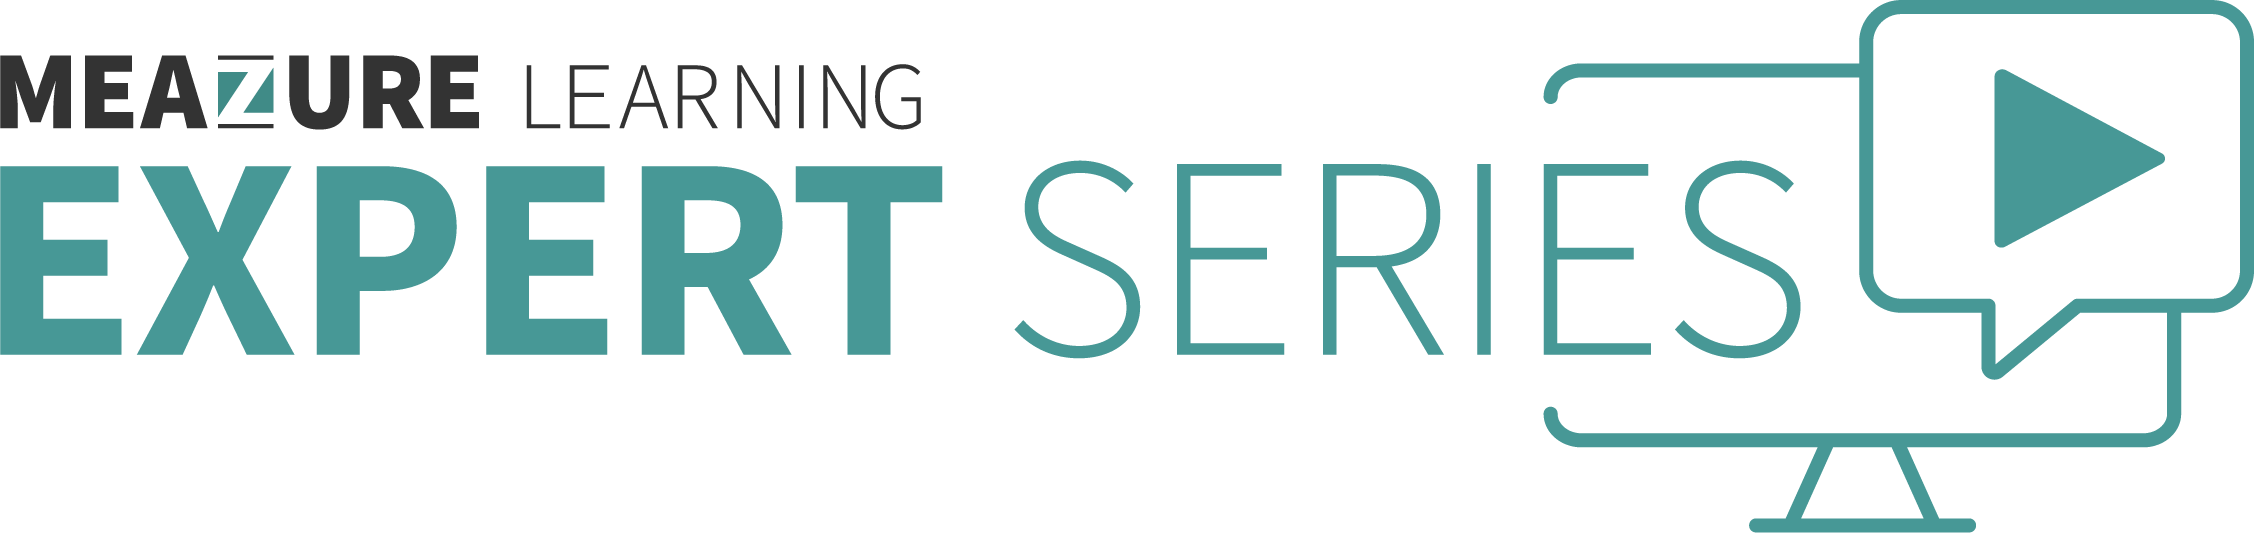 Expert Series Webinar Logo